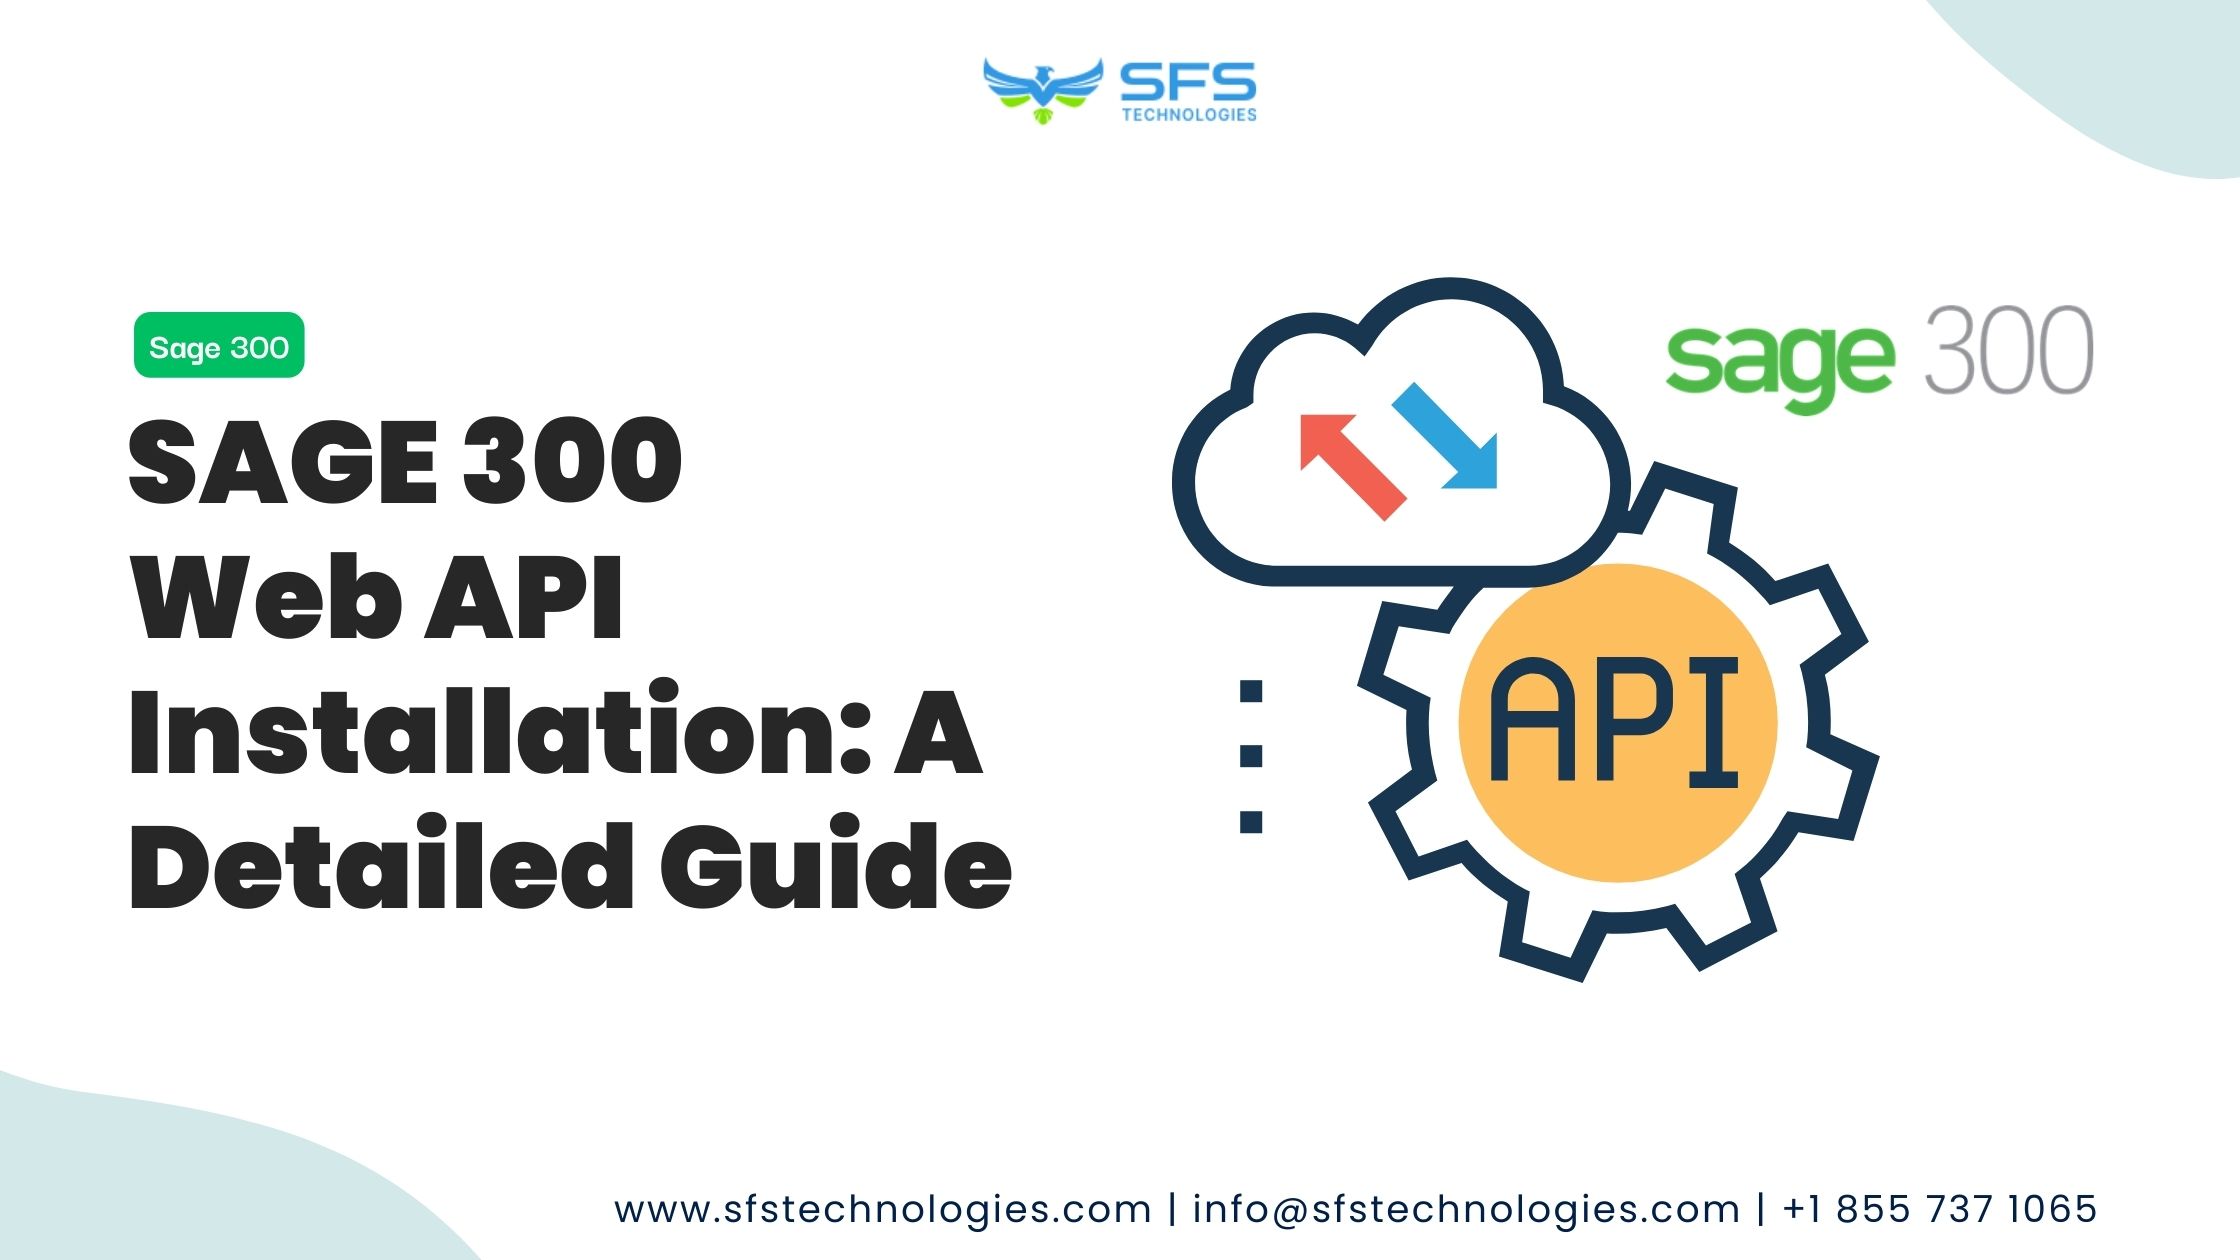 SAGE 300 Web API Installation